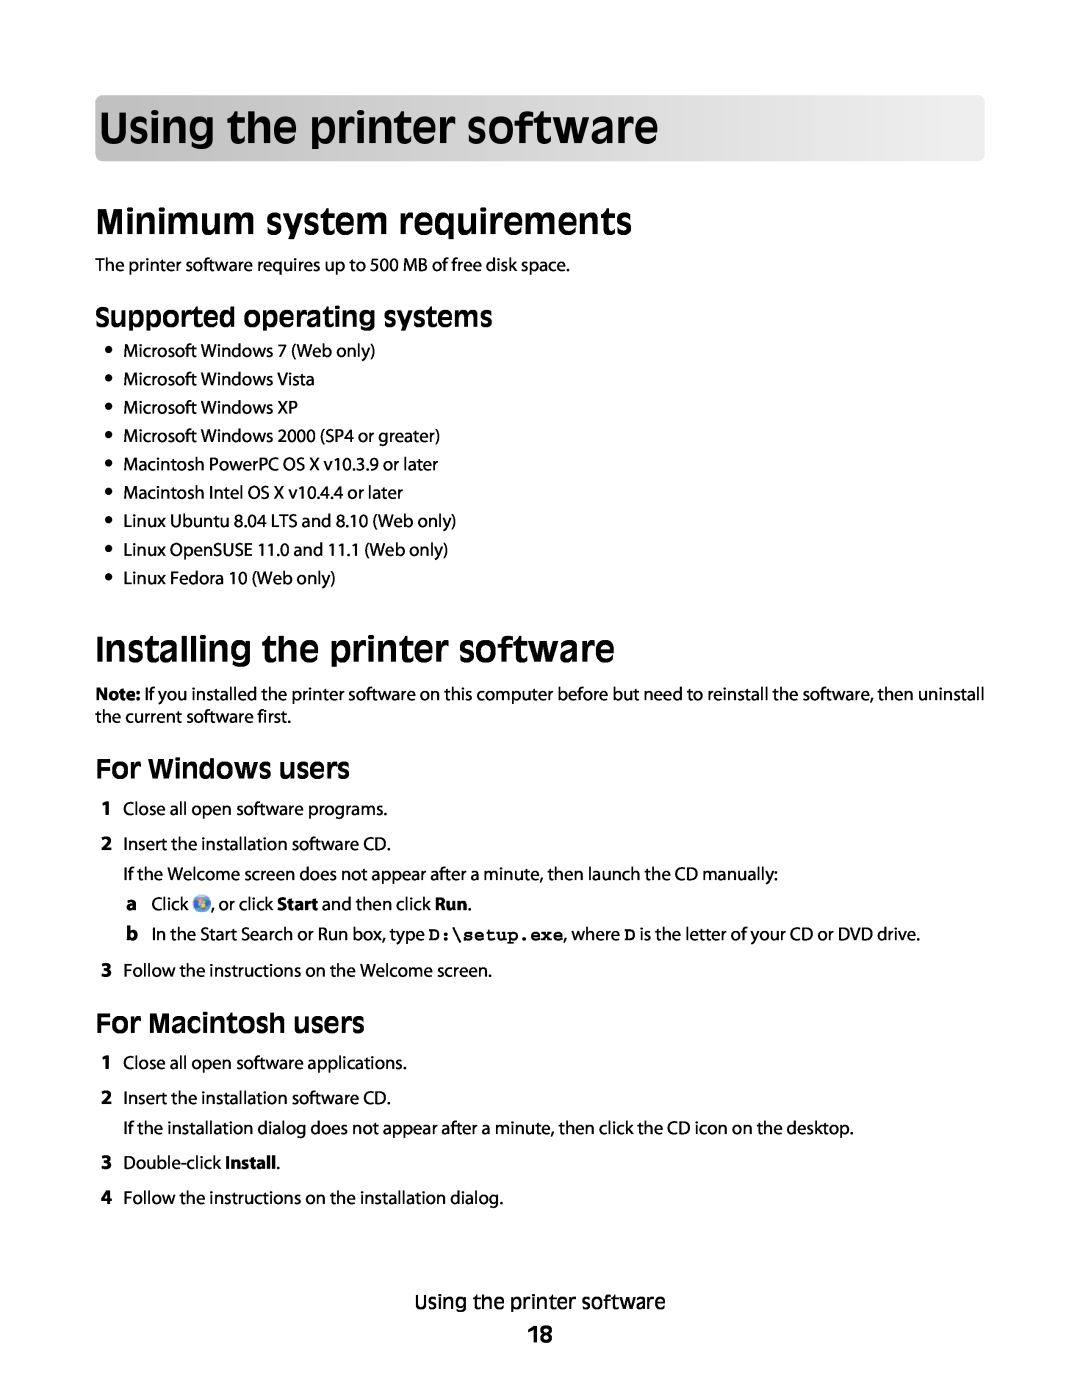 Lexmark Pro208, Pro205, Pro207 manual Usingtheprintersoftware, Minimum system requirements, Installing the printer software 